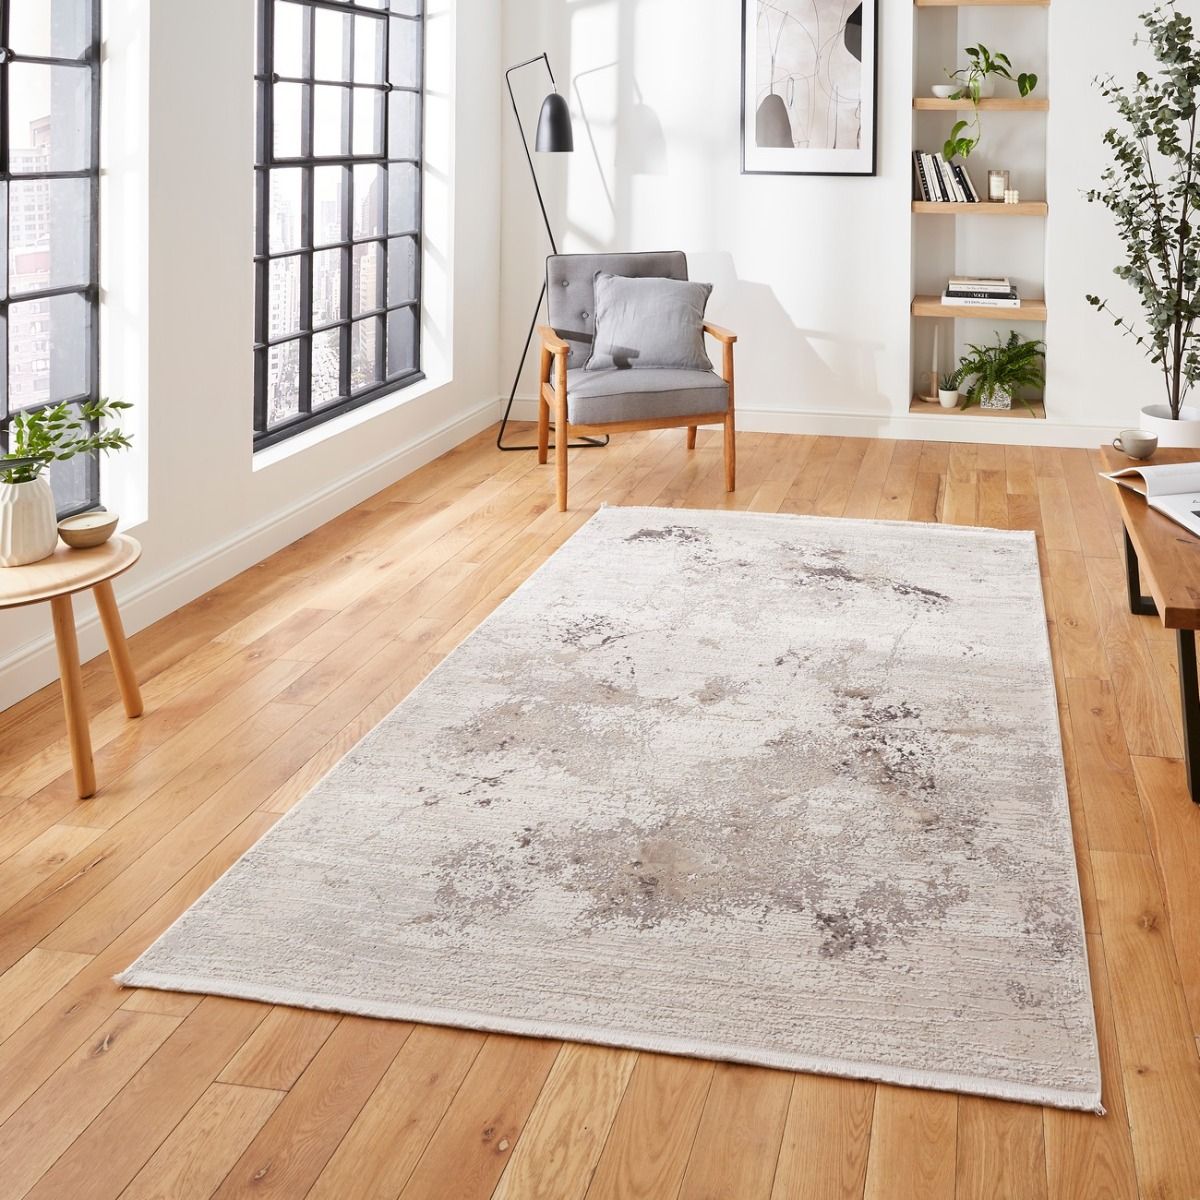 100 x 55 CM grey rectangle rug soft luxury thick carpet  #10,050 39 x 22 INCH 